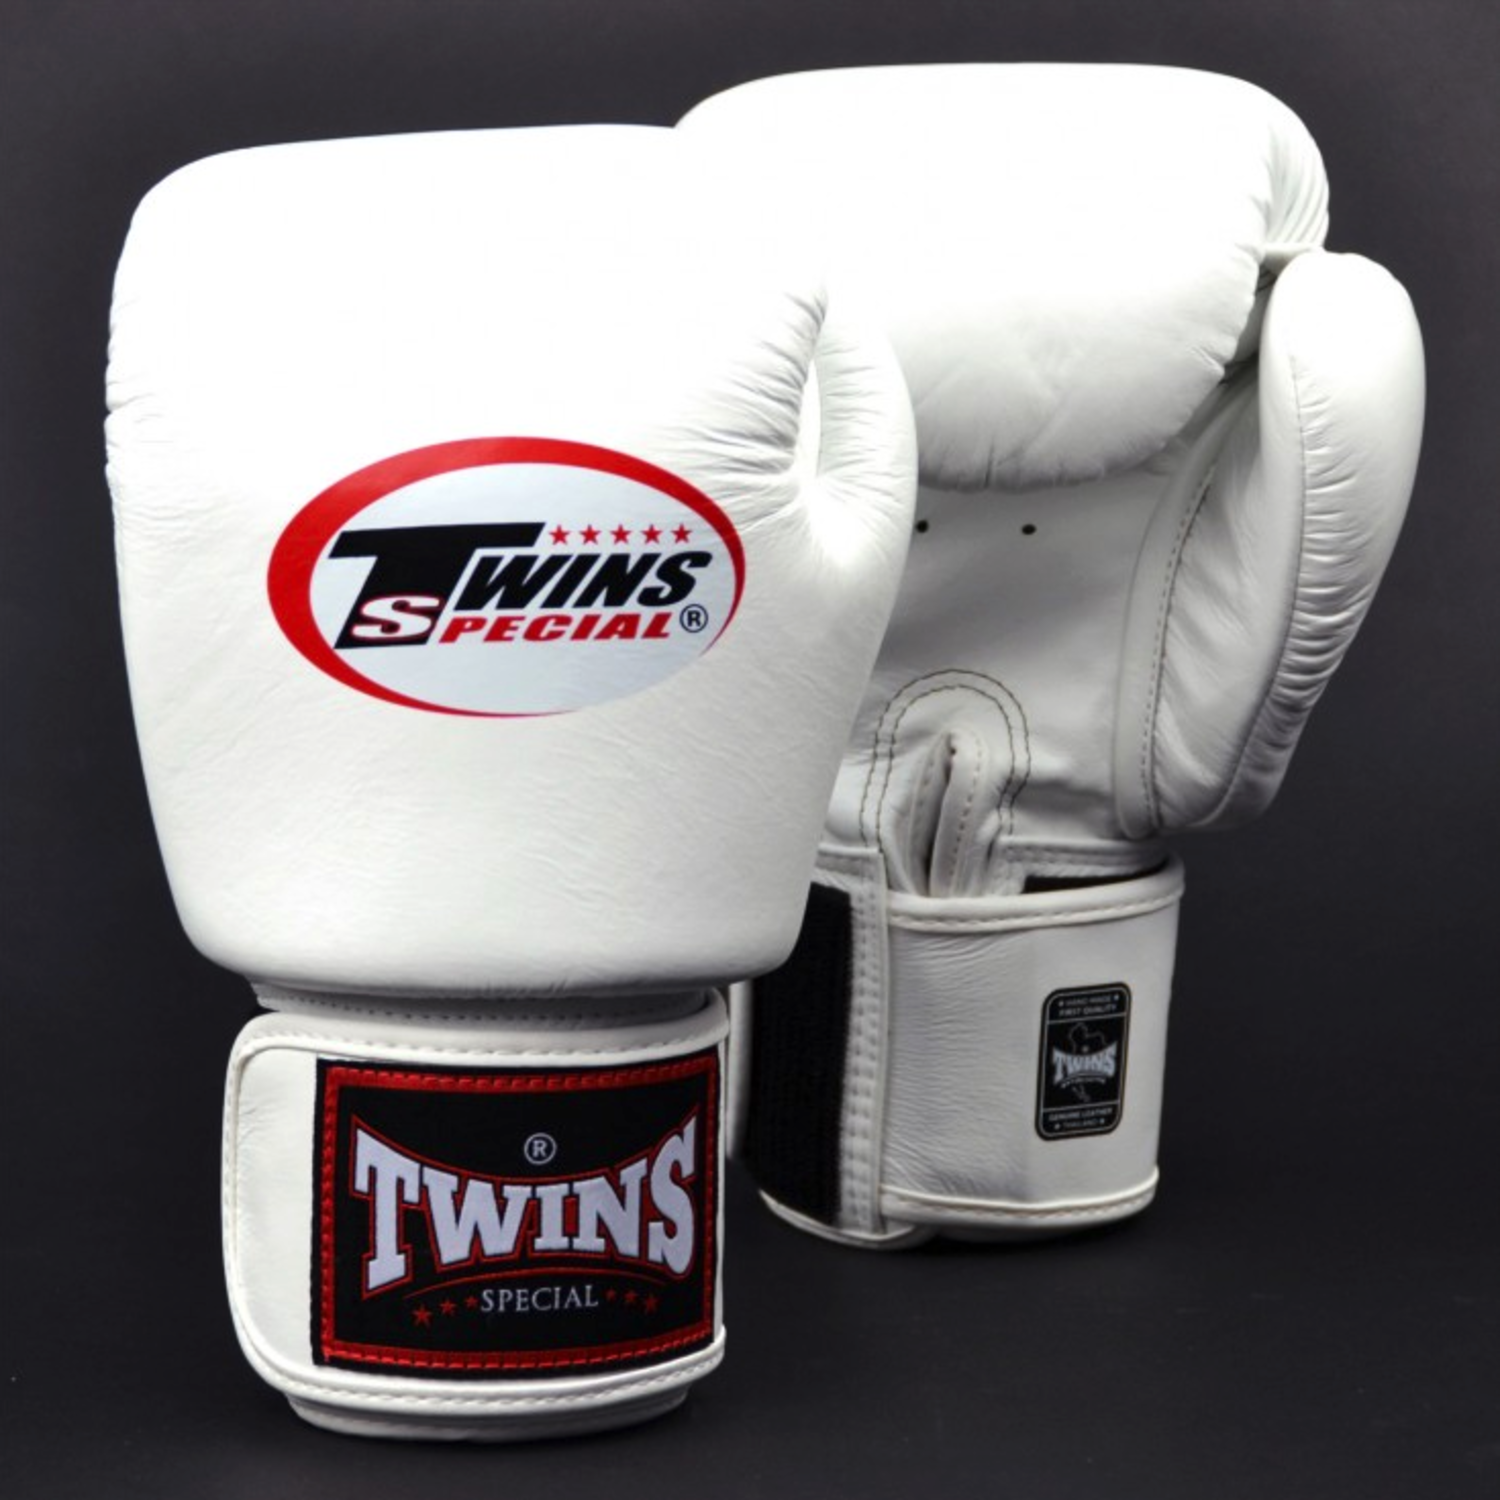 Boxing gloves Twins BGVL 3 White > Free Shipping